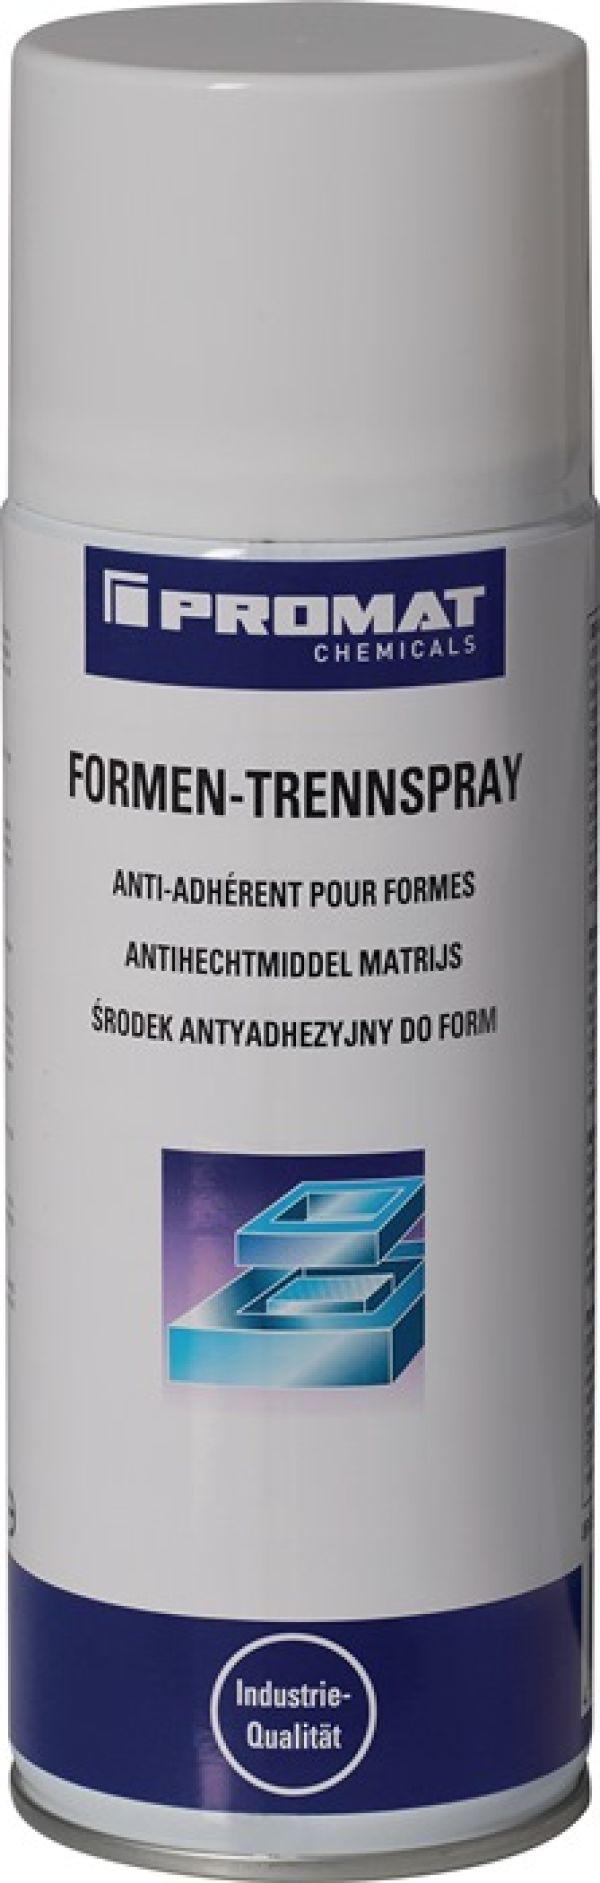 Formentrennmittel farblos 400 ml Spraydose PROMAT CHEMICALS